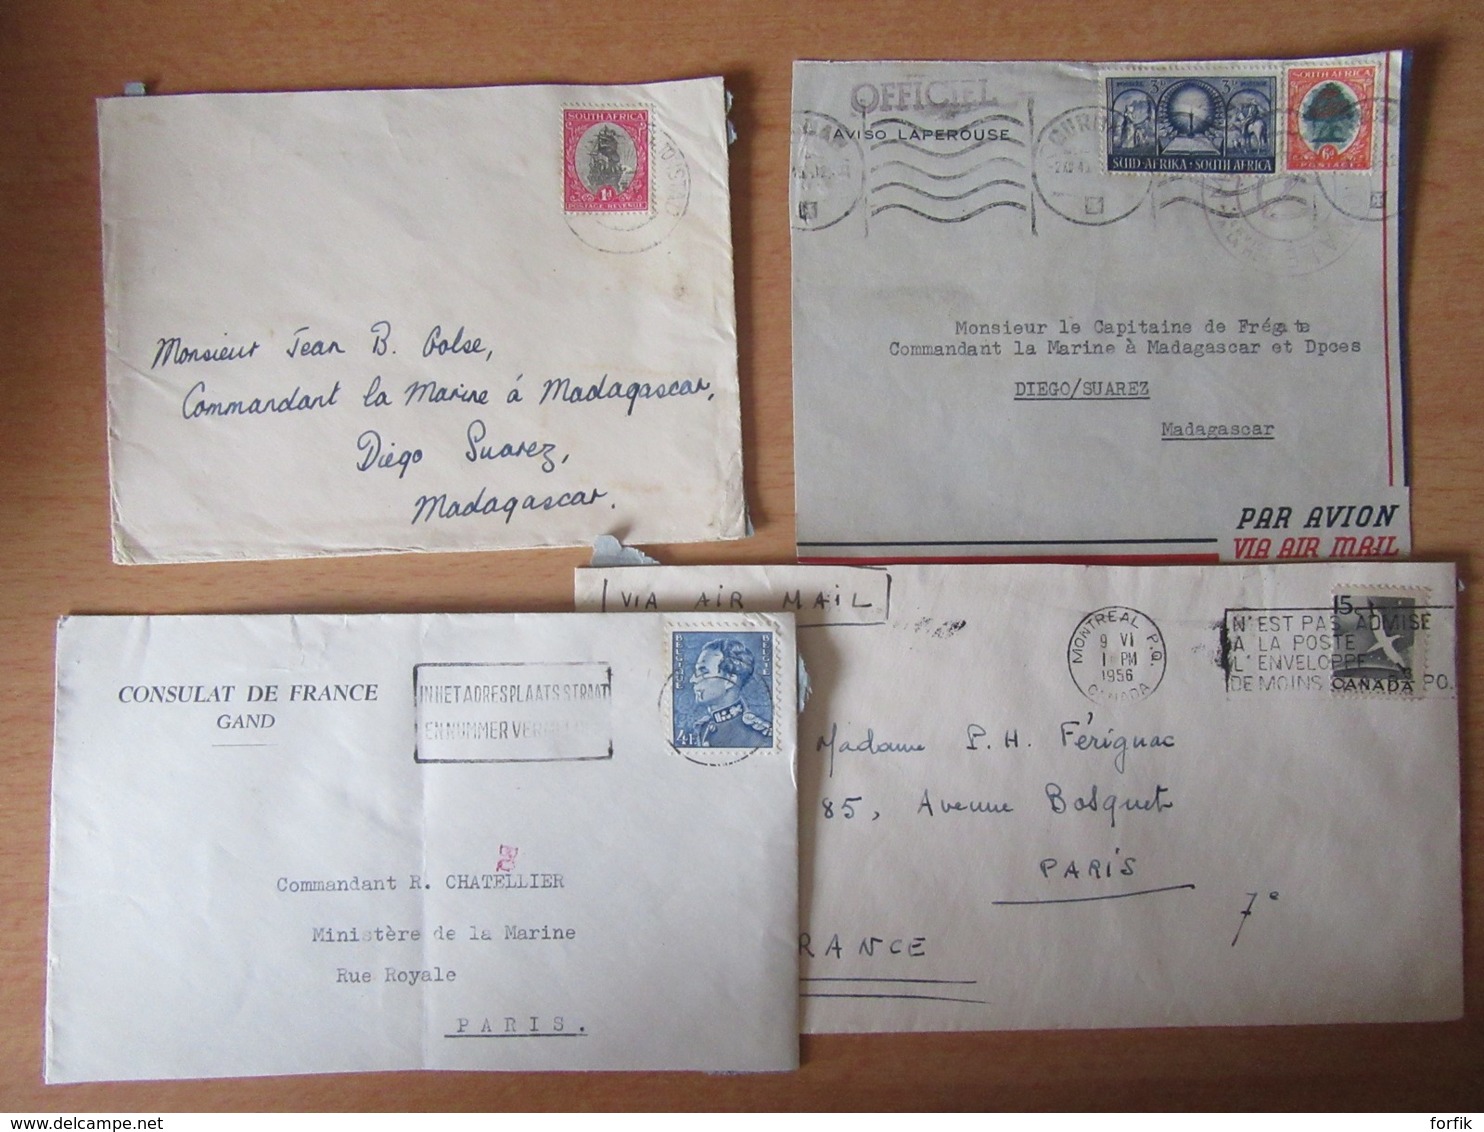 51 enveloppes dont nombreuses depuis ou vers Diego-Suarez (Madagascar) + divers pays USA, Canada, Indochine...